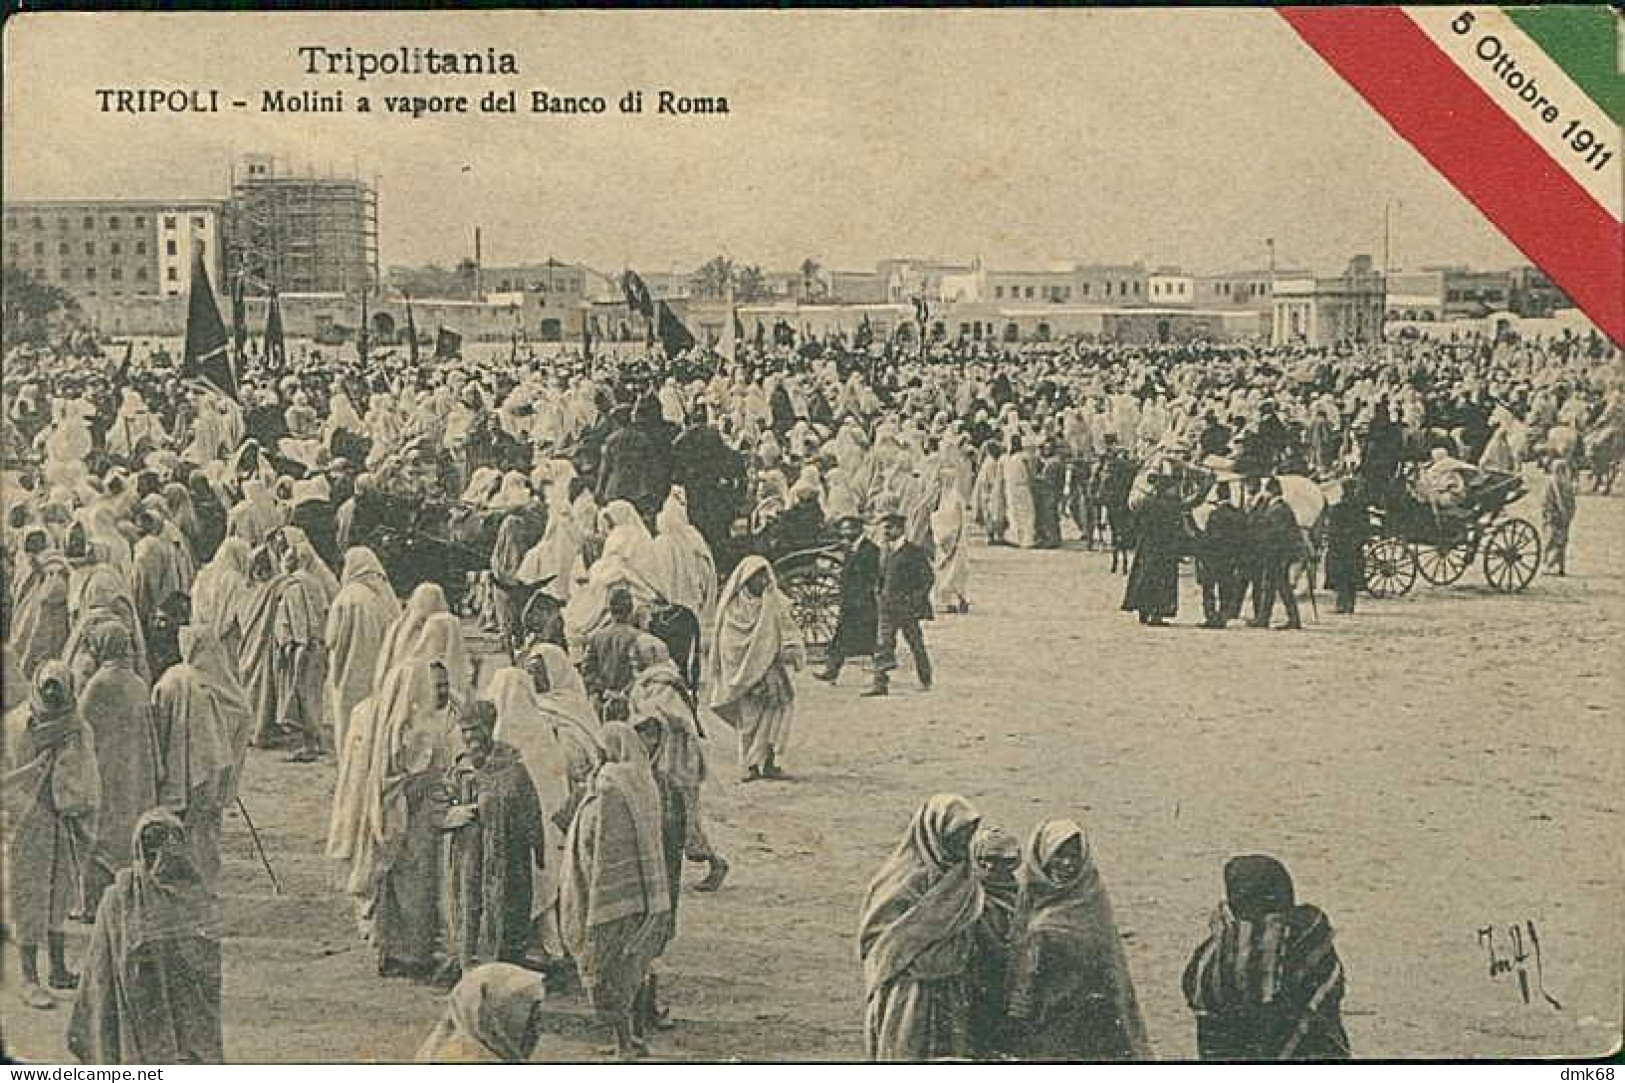 LIBYA / LIBIA - TRIPOLI - MOLINI A VAPORE DEL BANCO DI ROMA - EDIZ. FUMAGALLI - 5 OTT. 1911 (12487/2) - Libyen